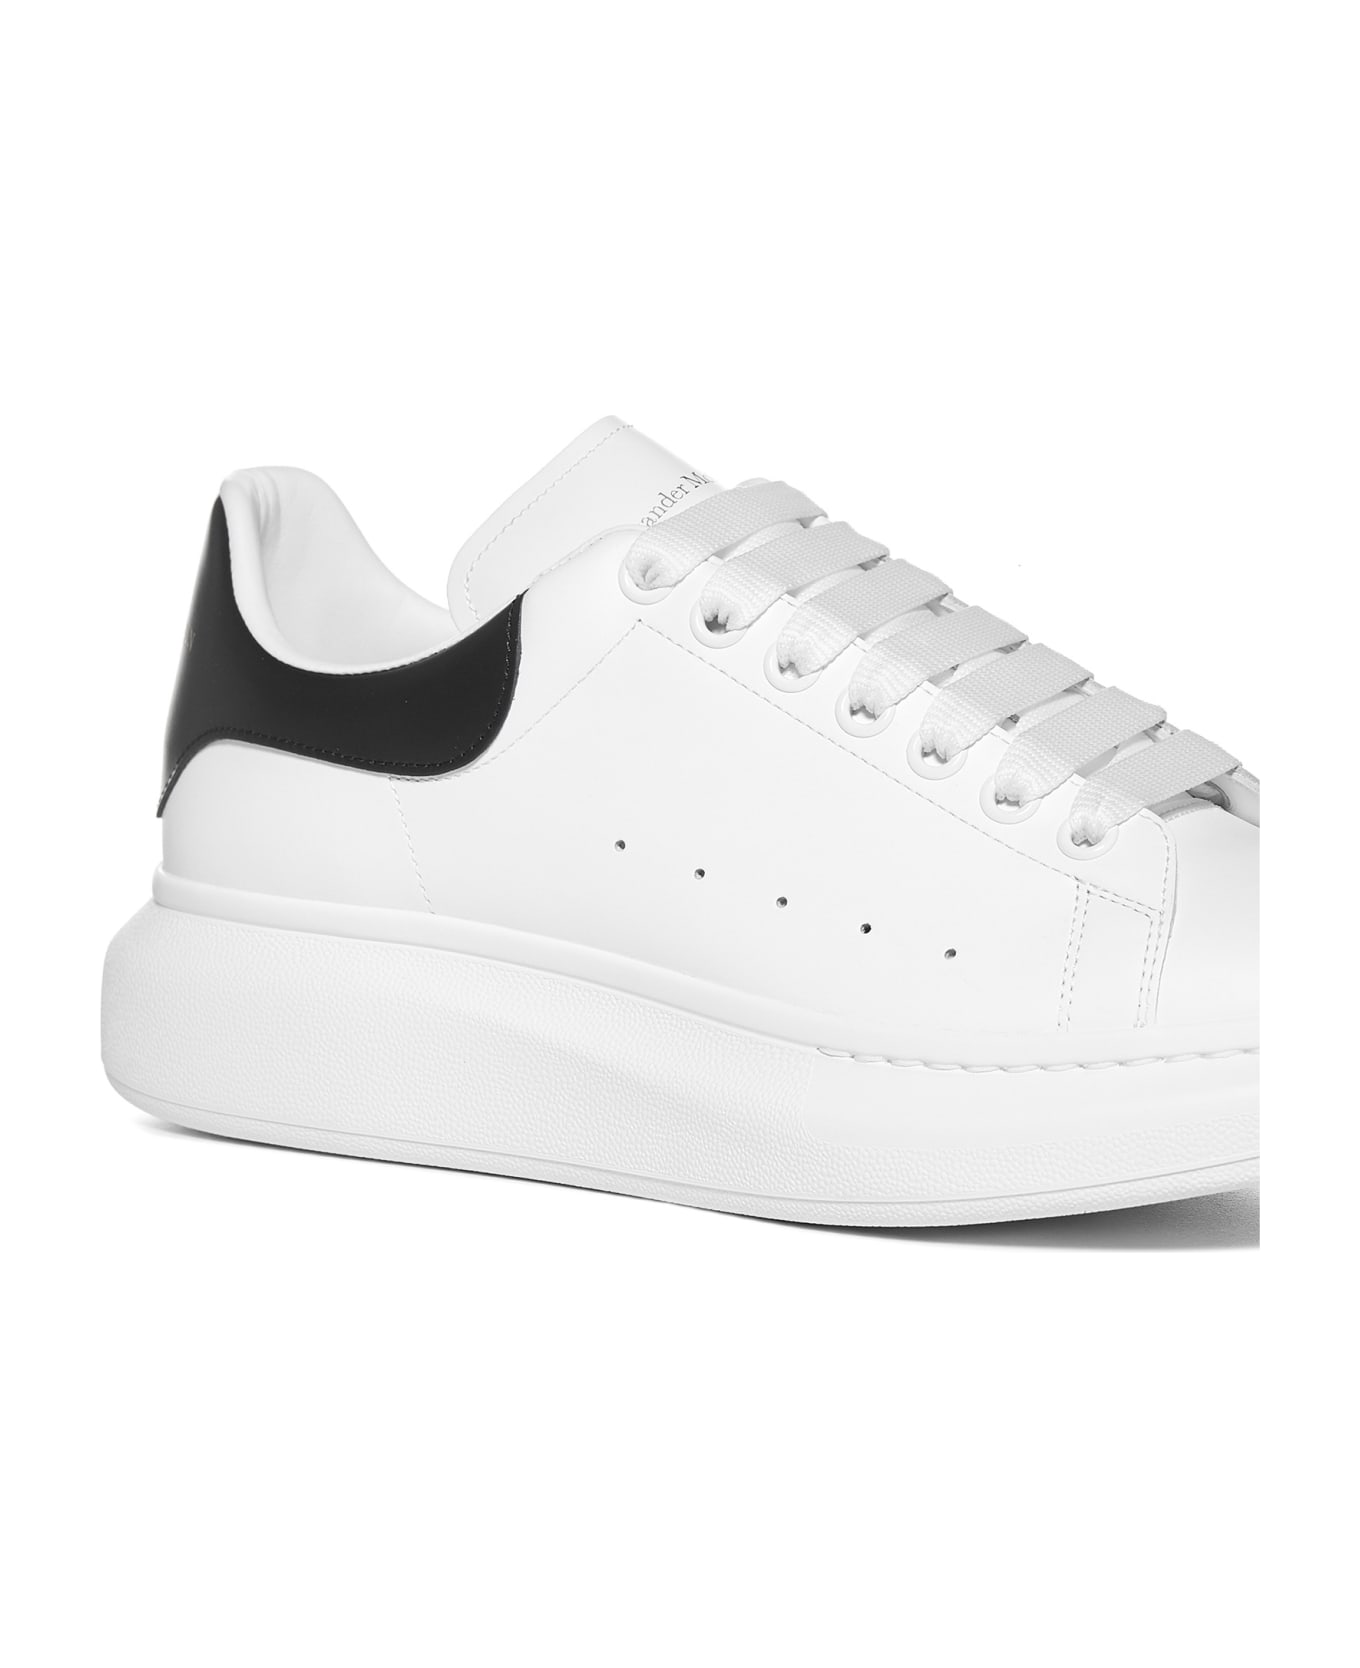 Alexander McQueen Oversize Leather Sneakers - White/black